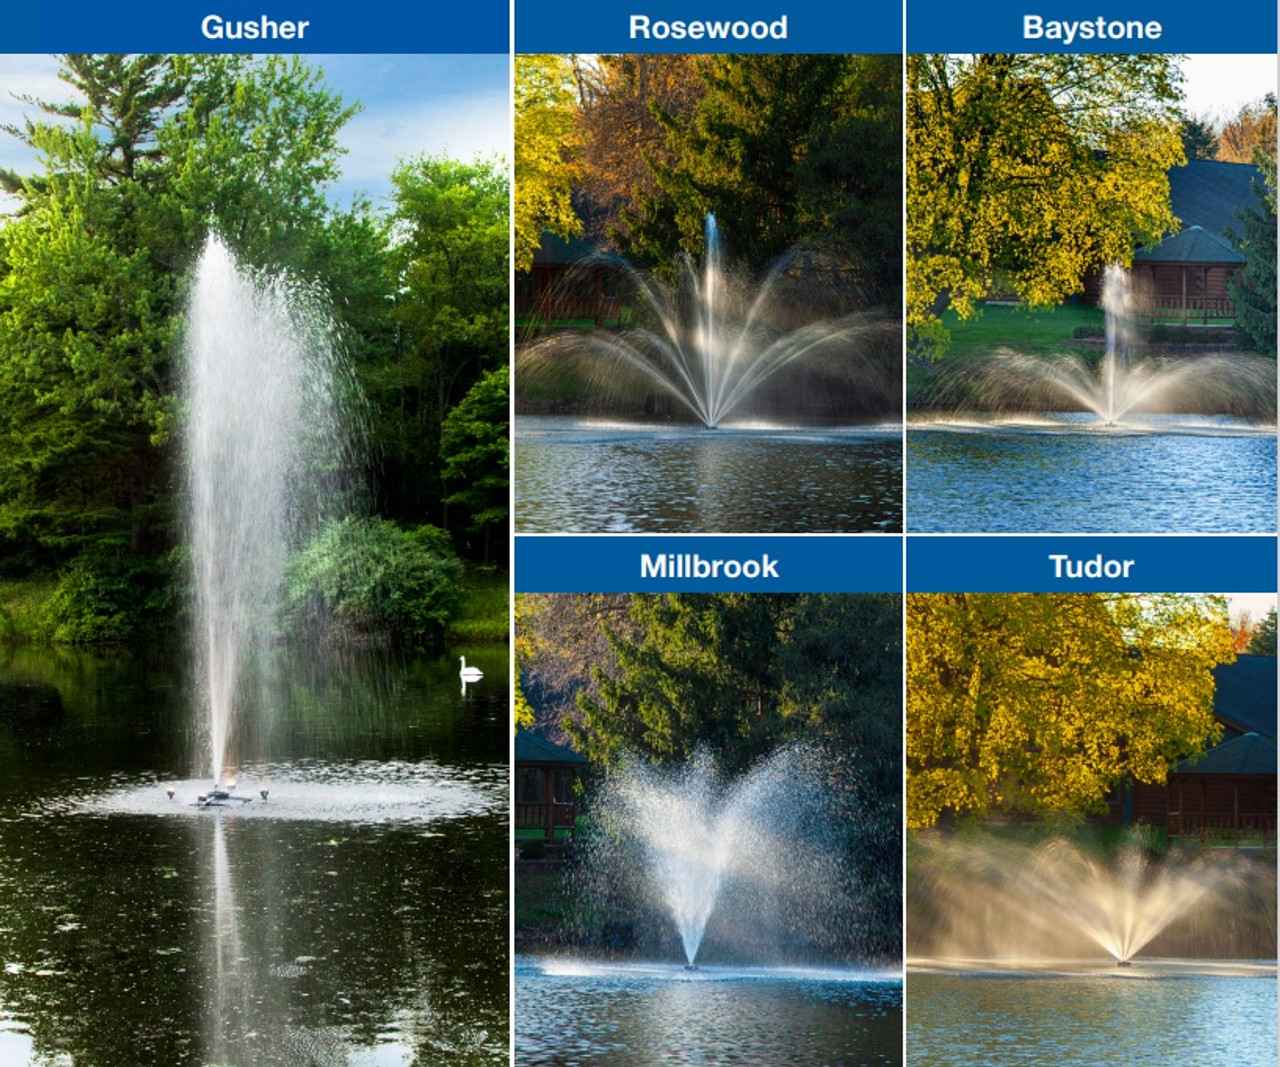 Scott Aerator The Great Lakes Fountain (FREE SHIPPING)